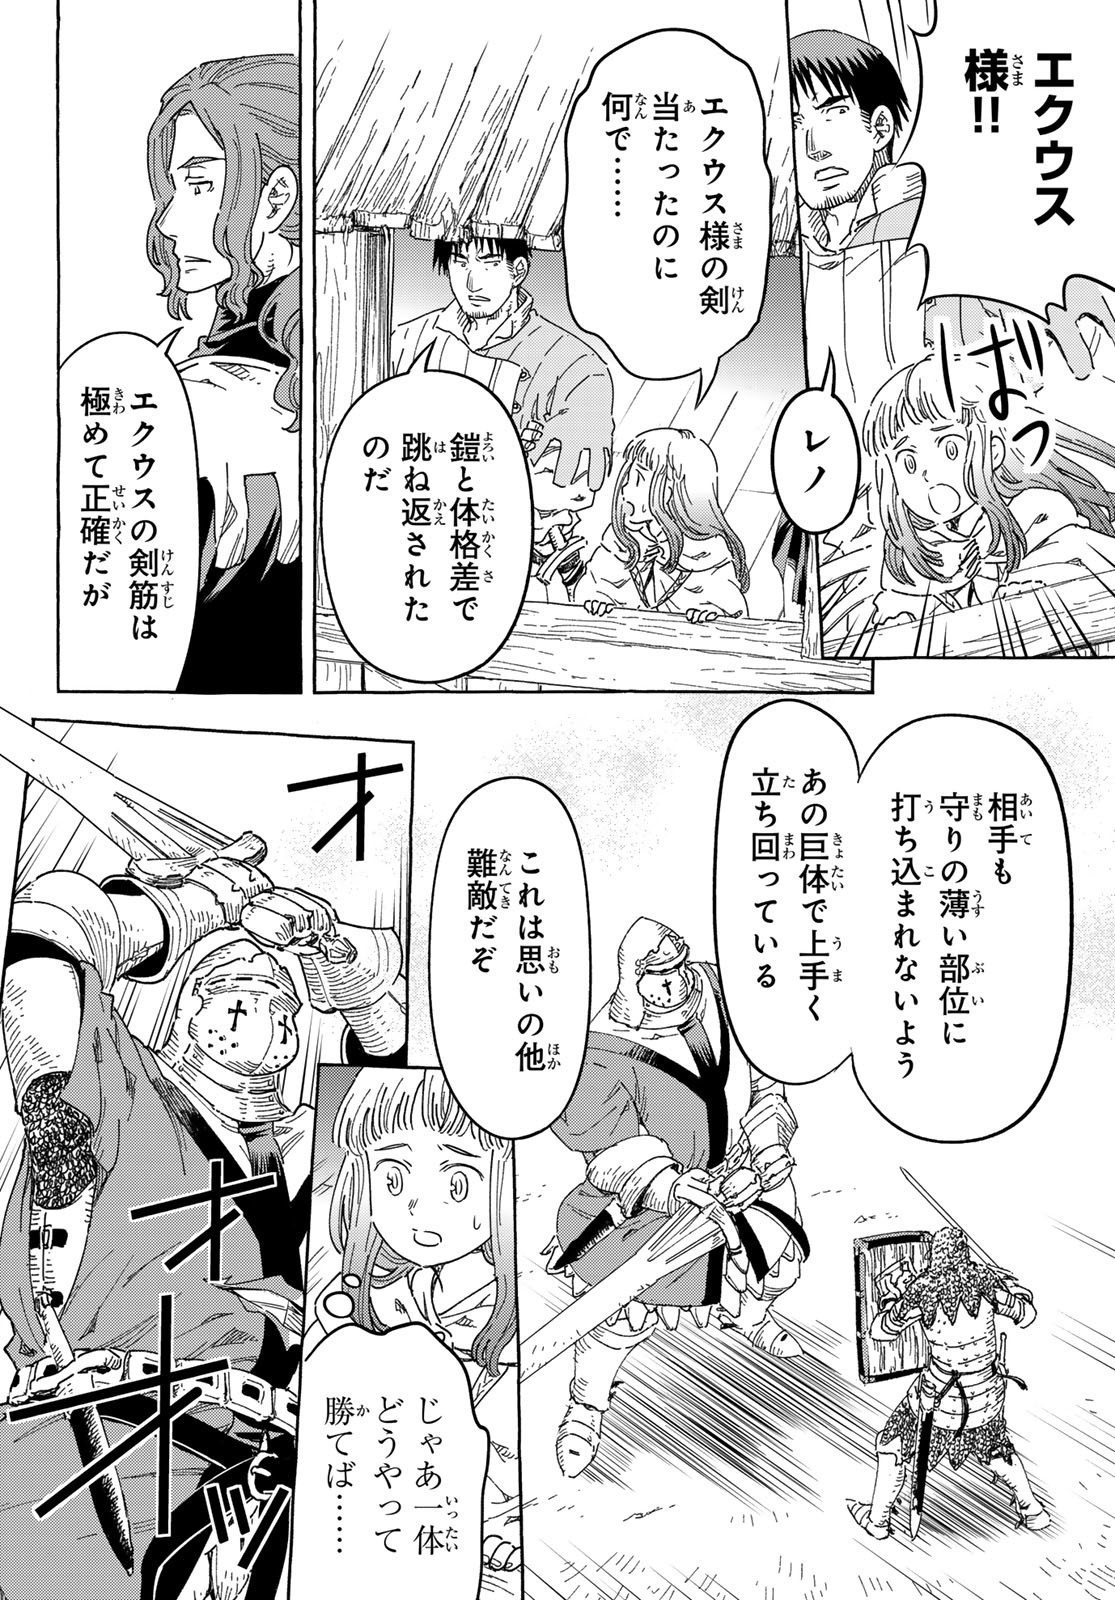 Kishi Ou no Shokutaku - Chapter 8 - Page 2